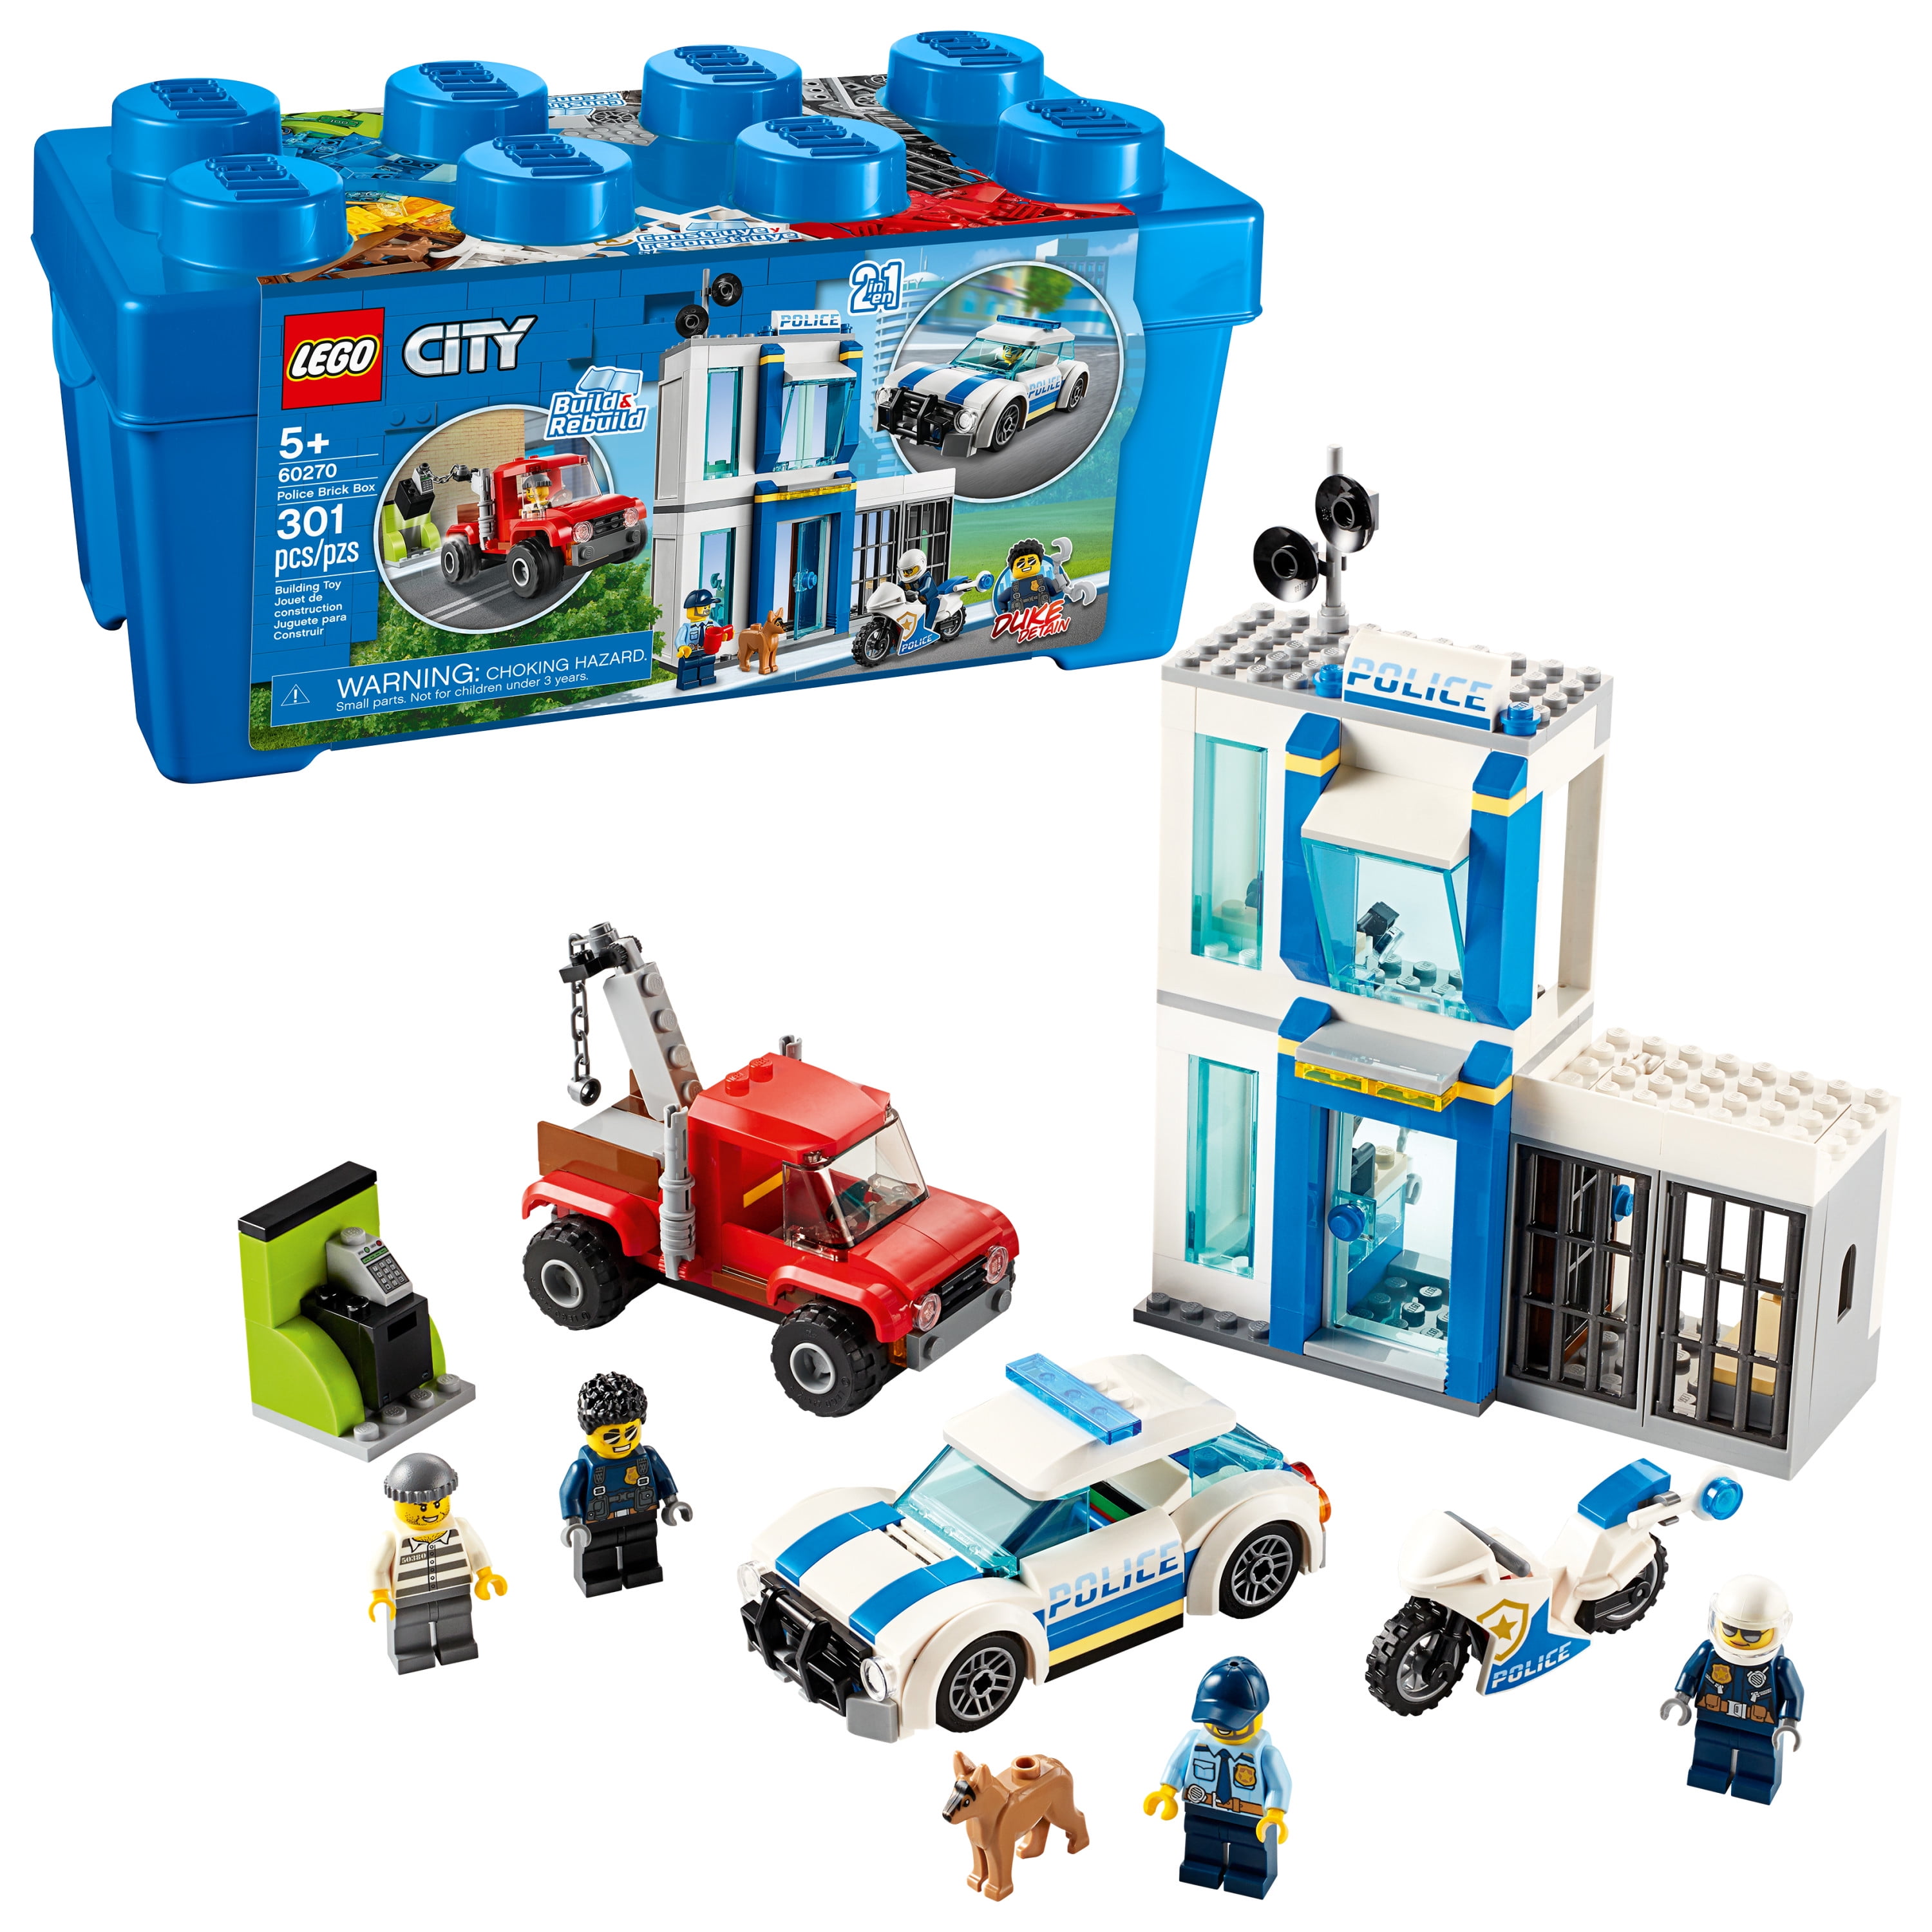 Noord kabel Steken LEGO City Police Brick Box 60270 Action Cop Building Toy for Kids (301  Pieces) - Walmart.com